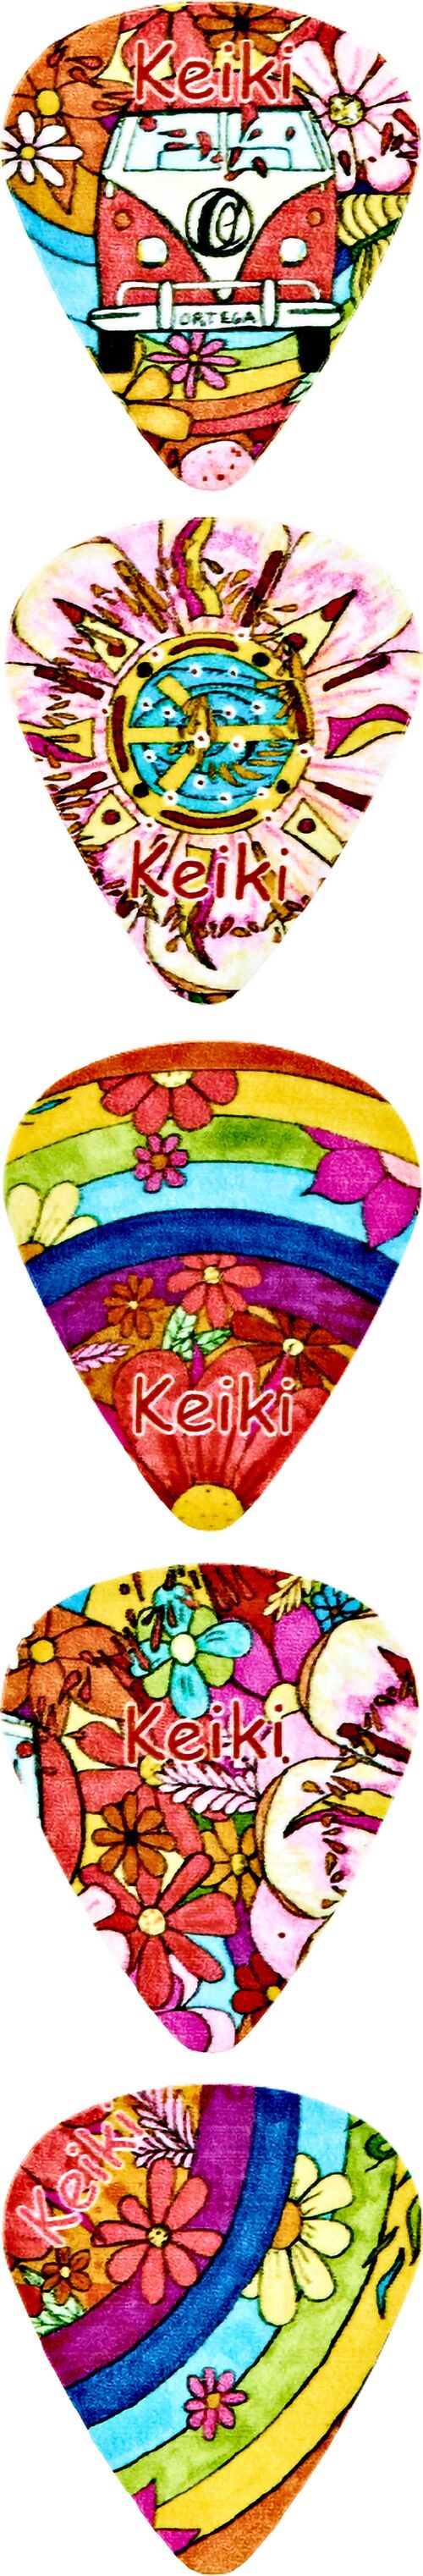 Keiki Pack de Pas Kp68-5